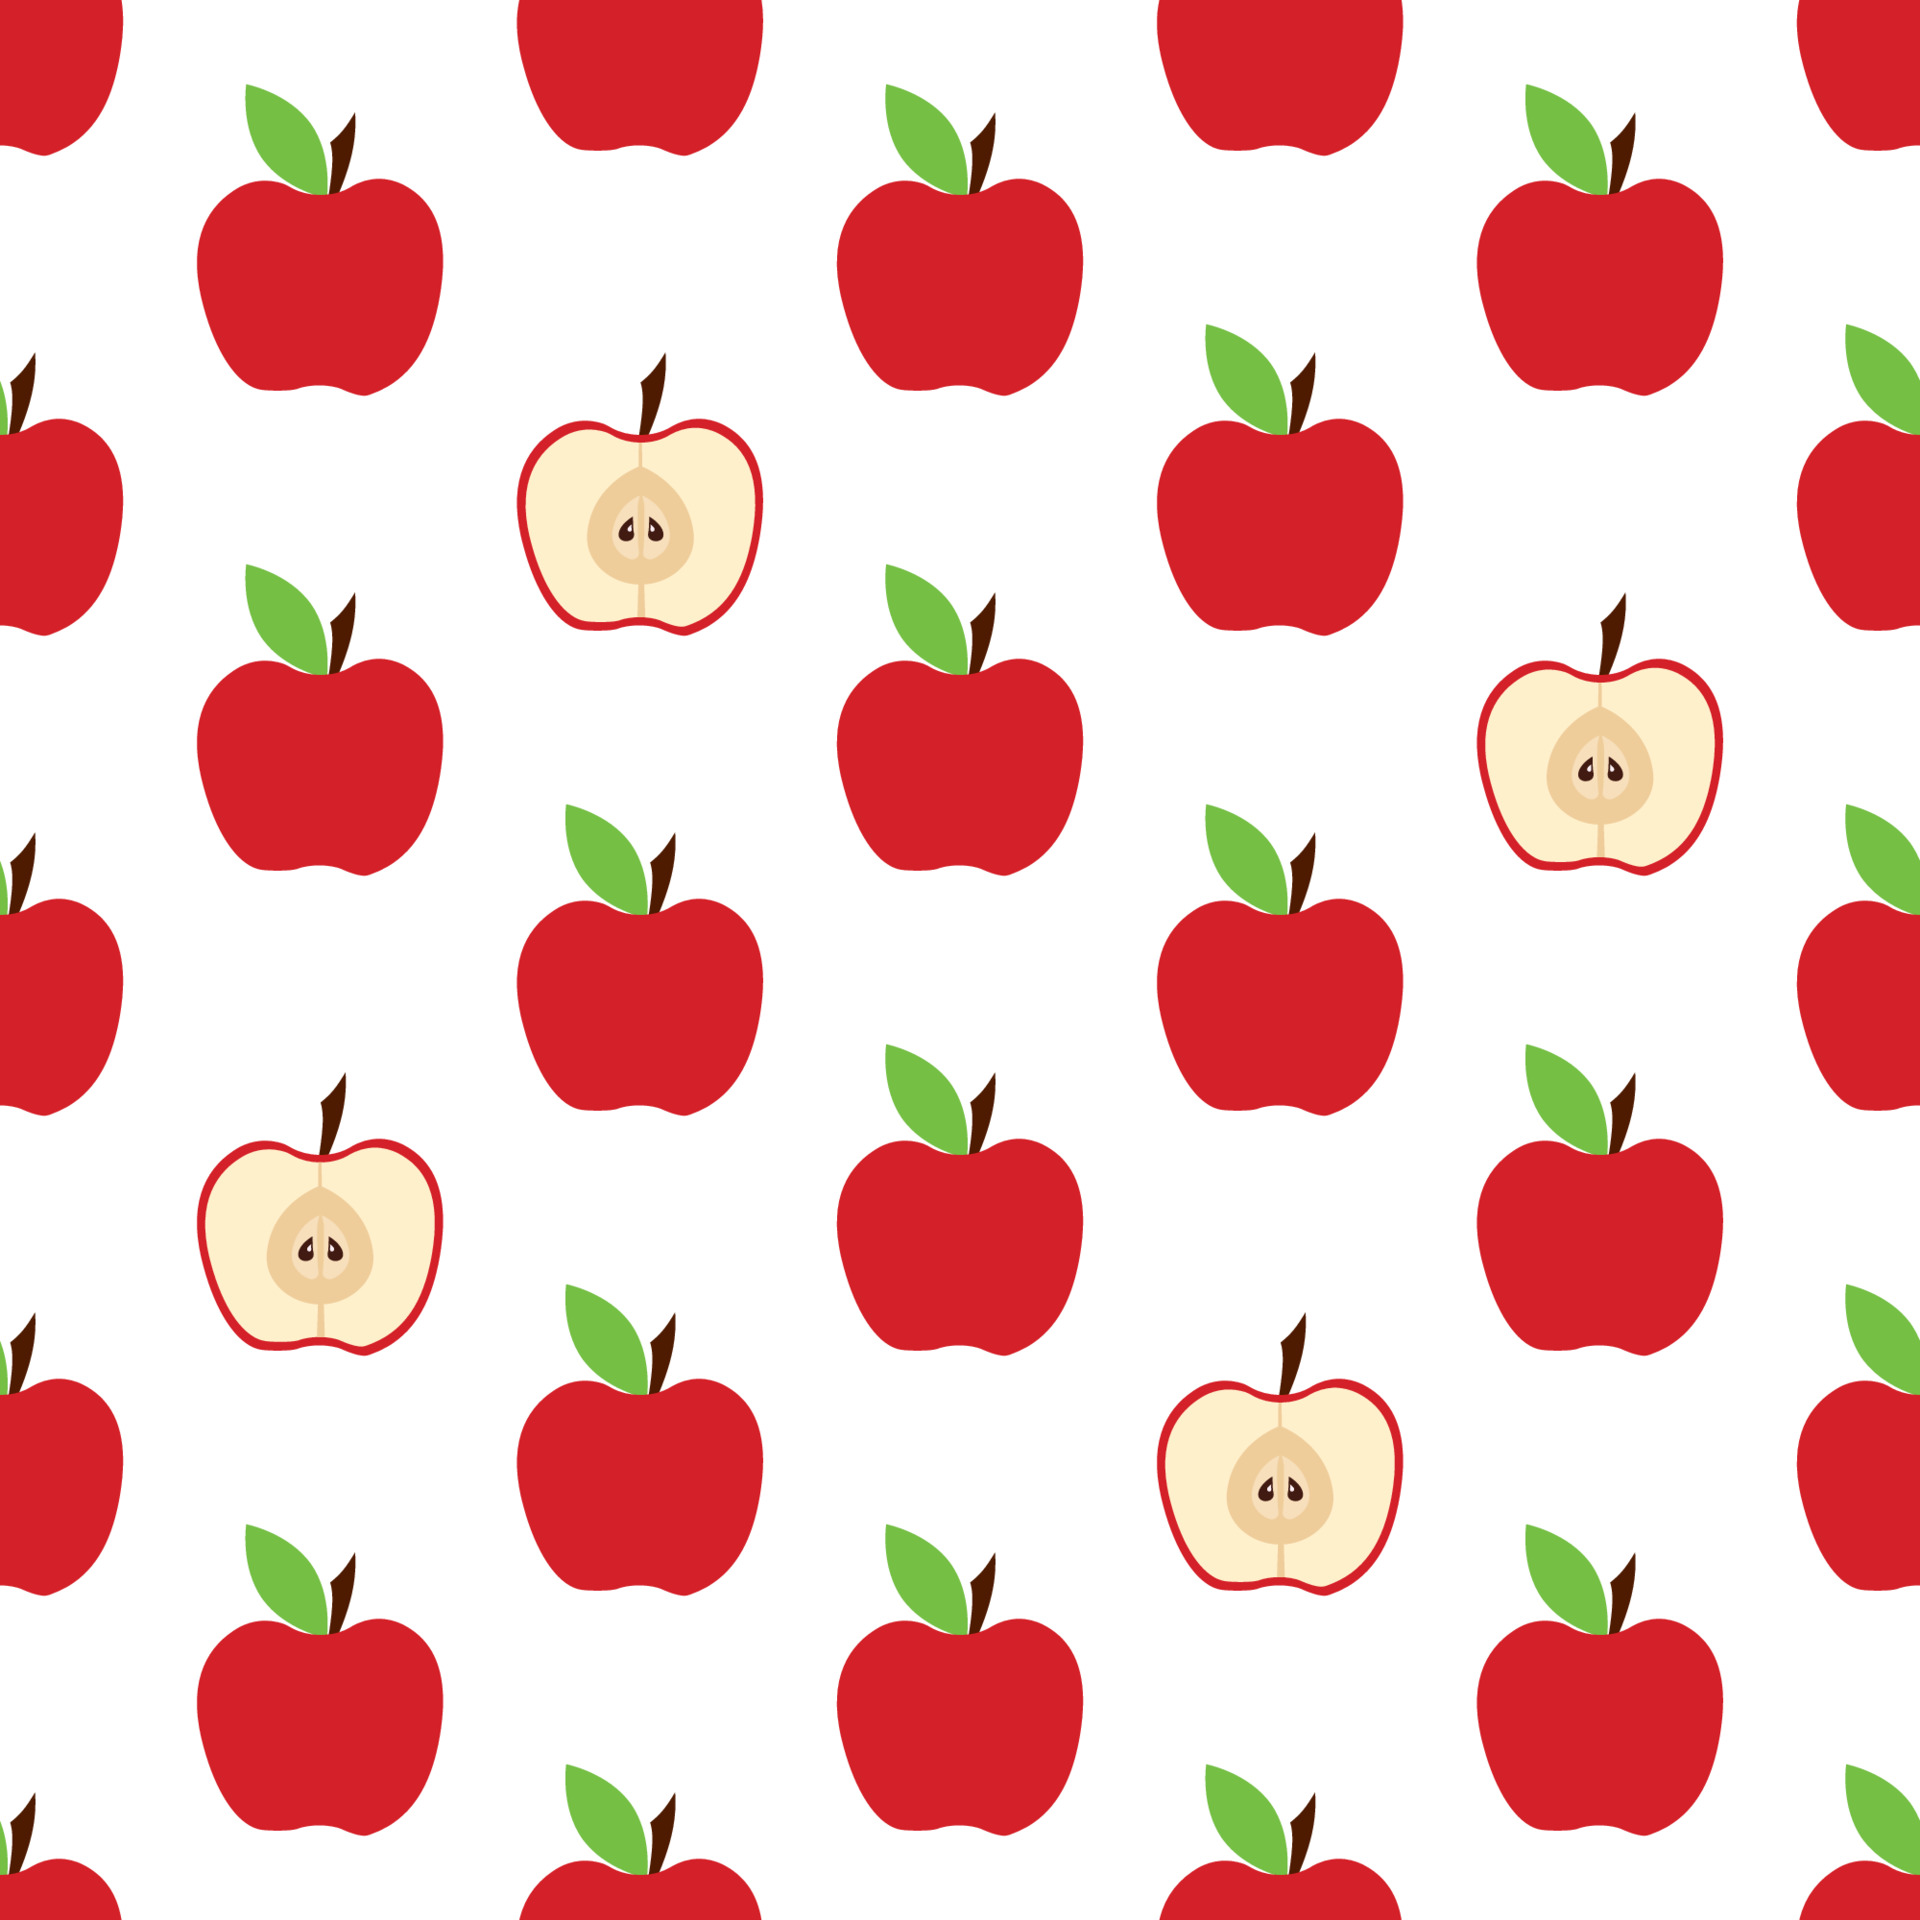 Premium Vector  Apple pattern background fruit vector illustration